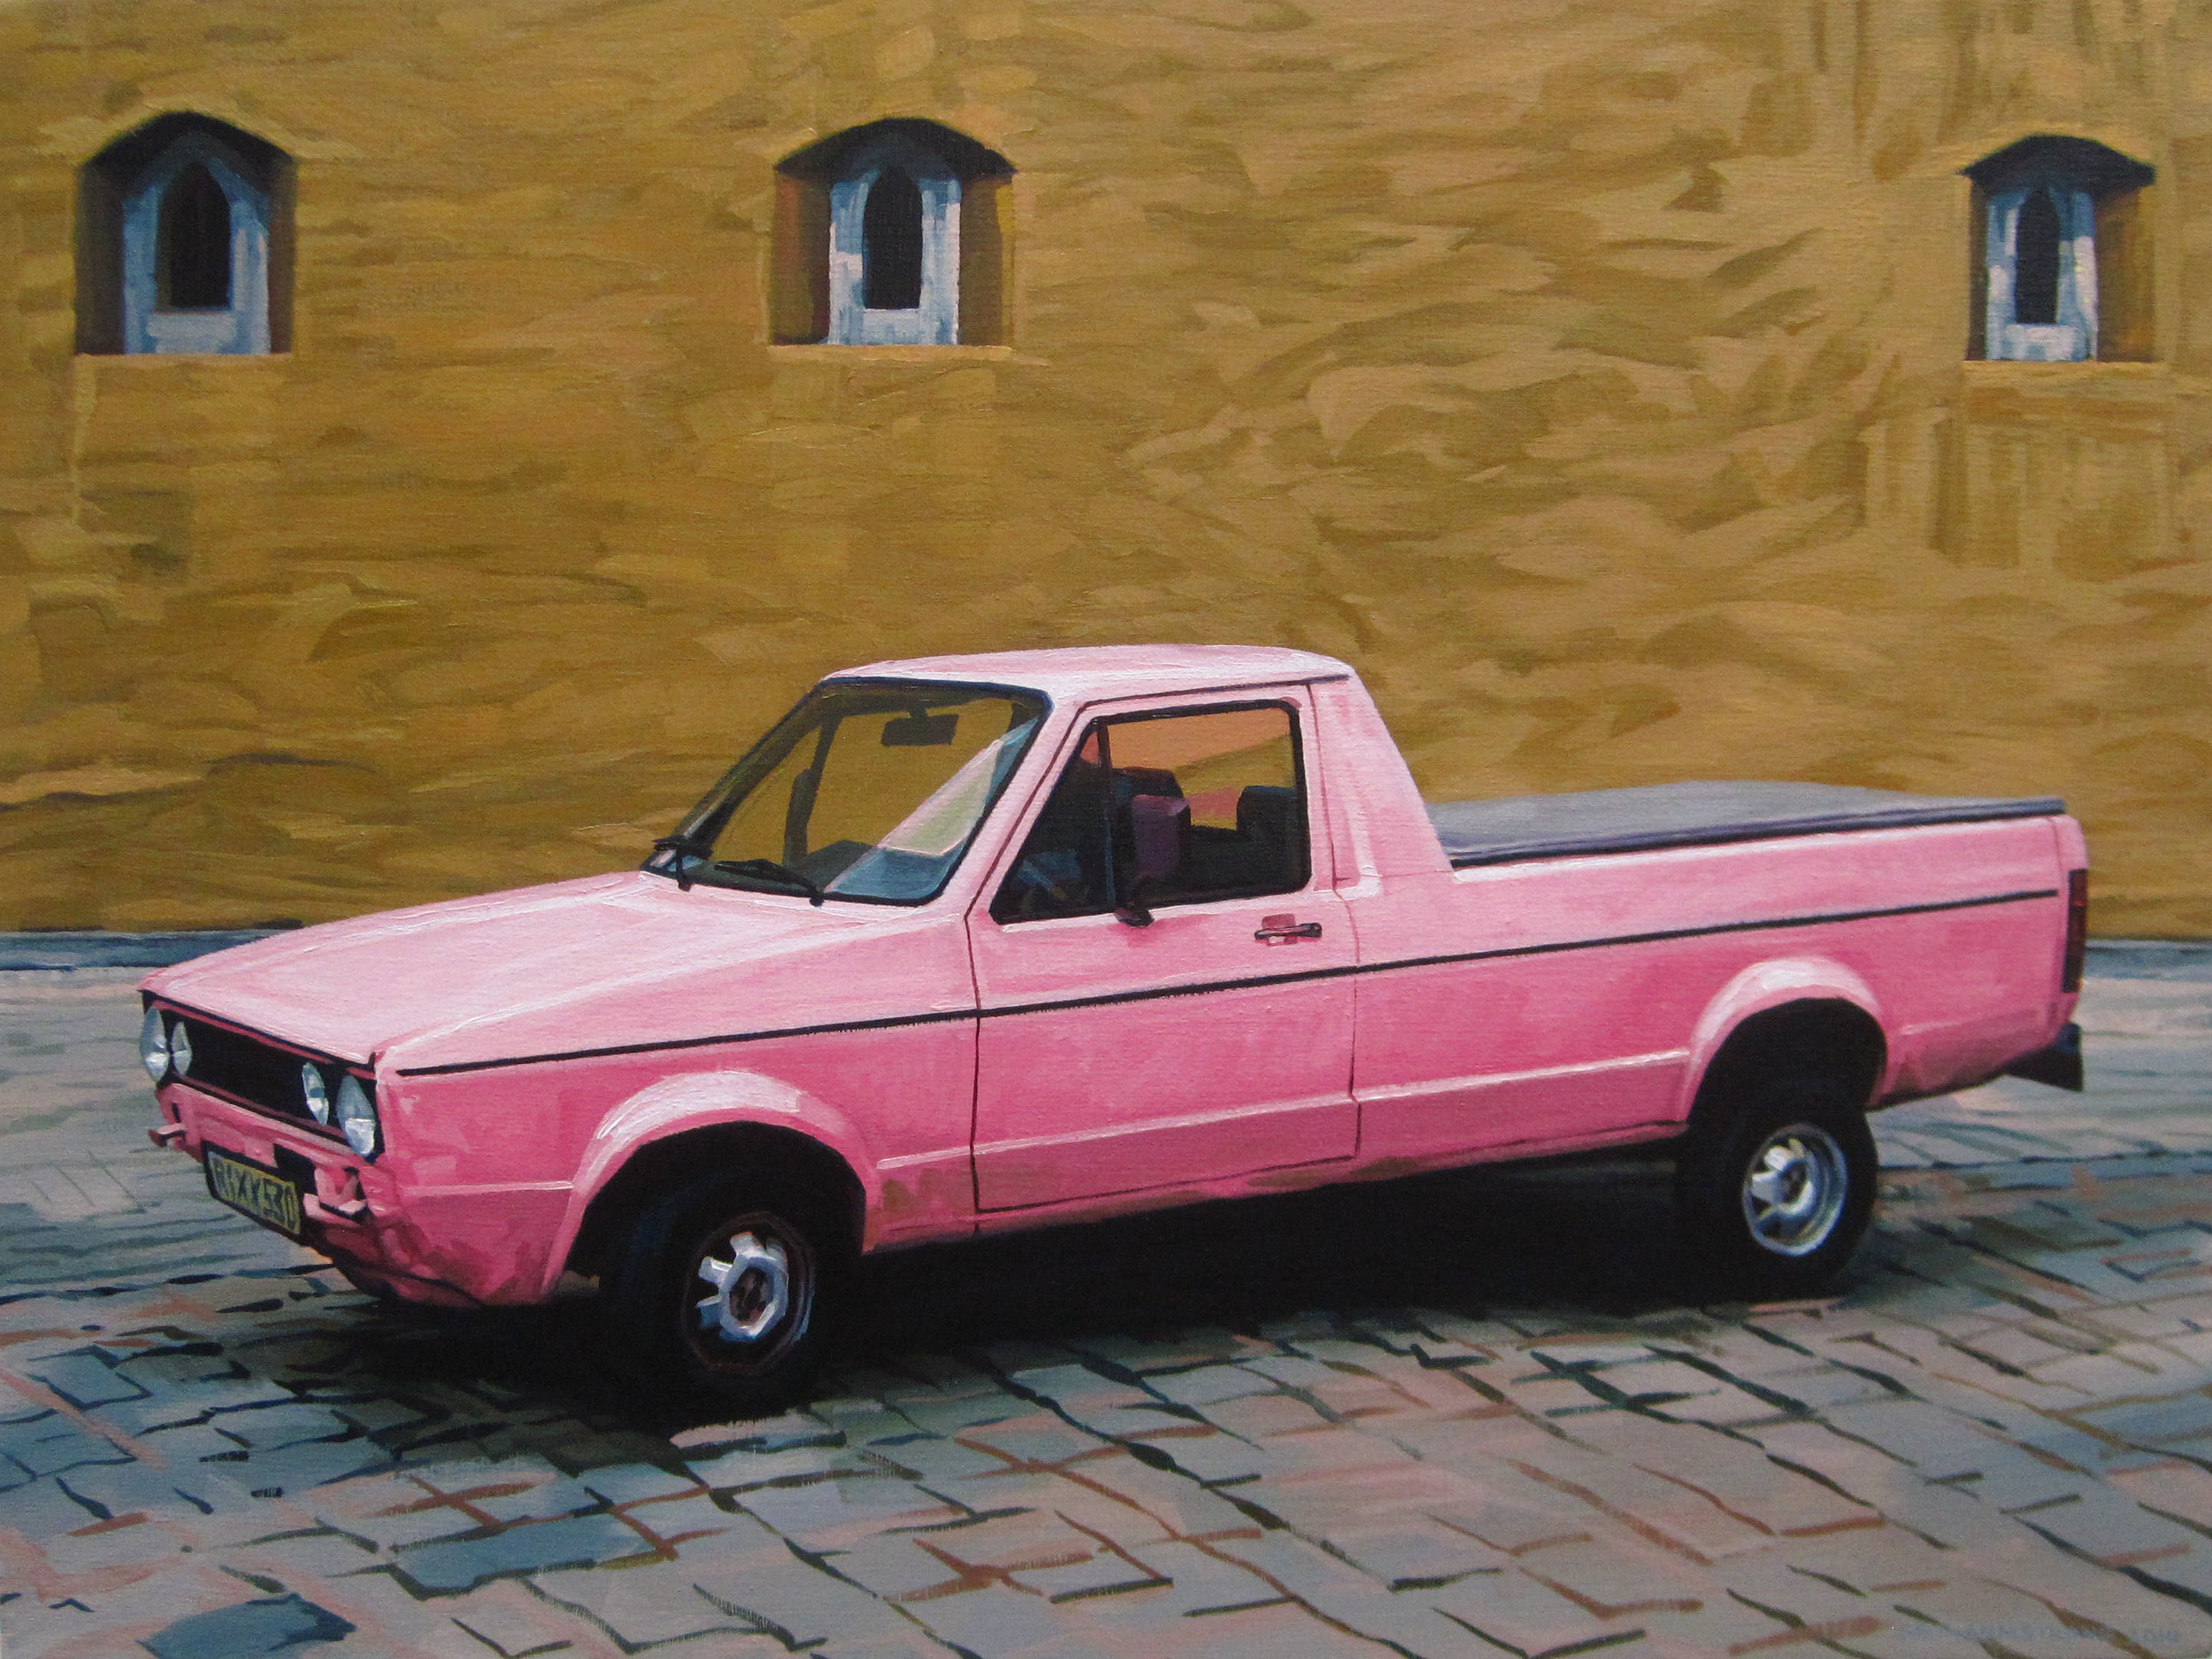 The Little Pink Truck